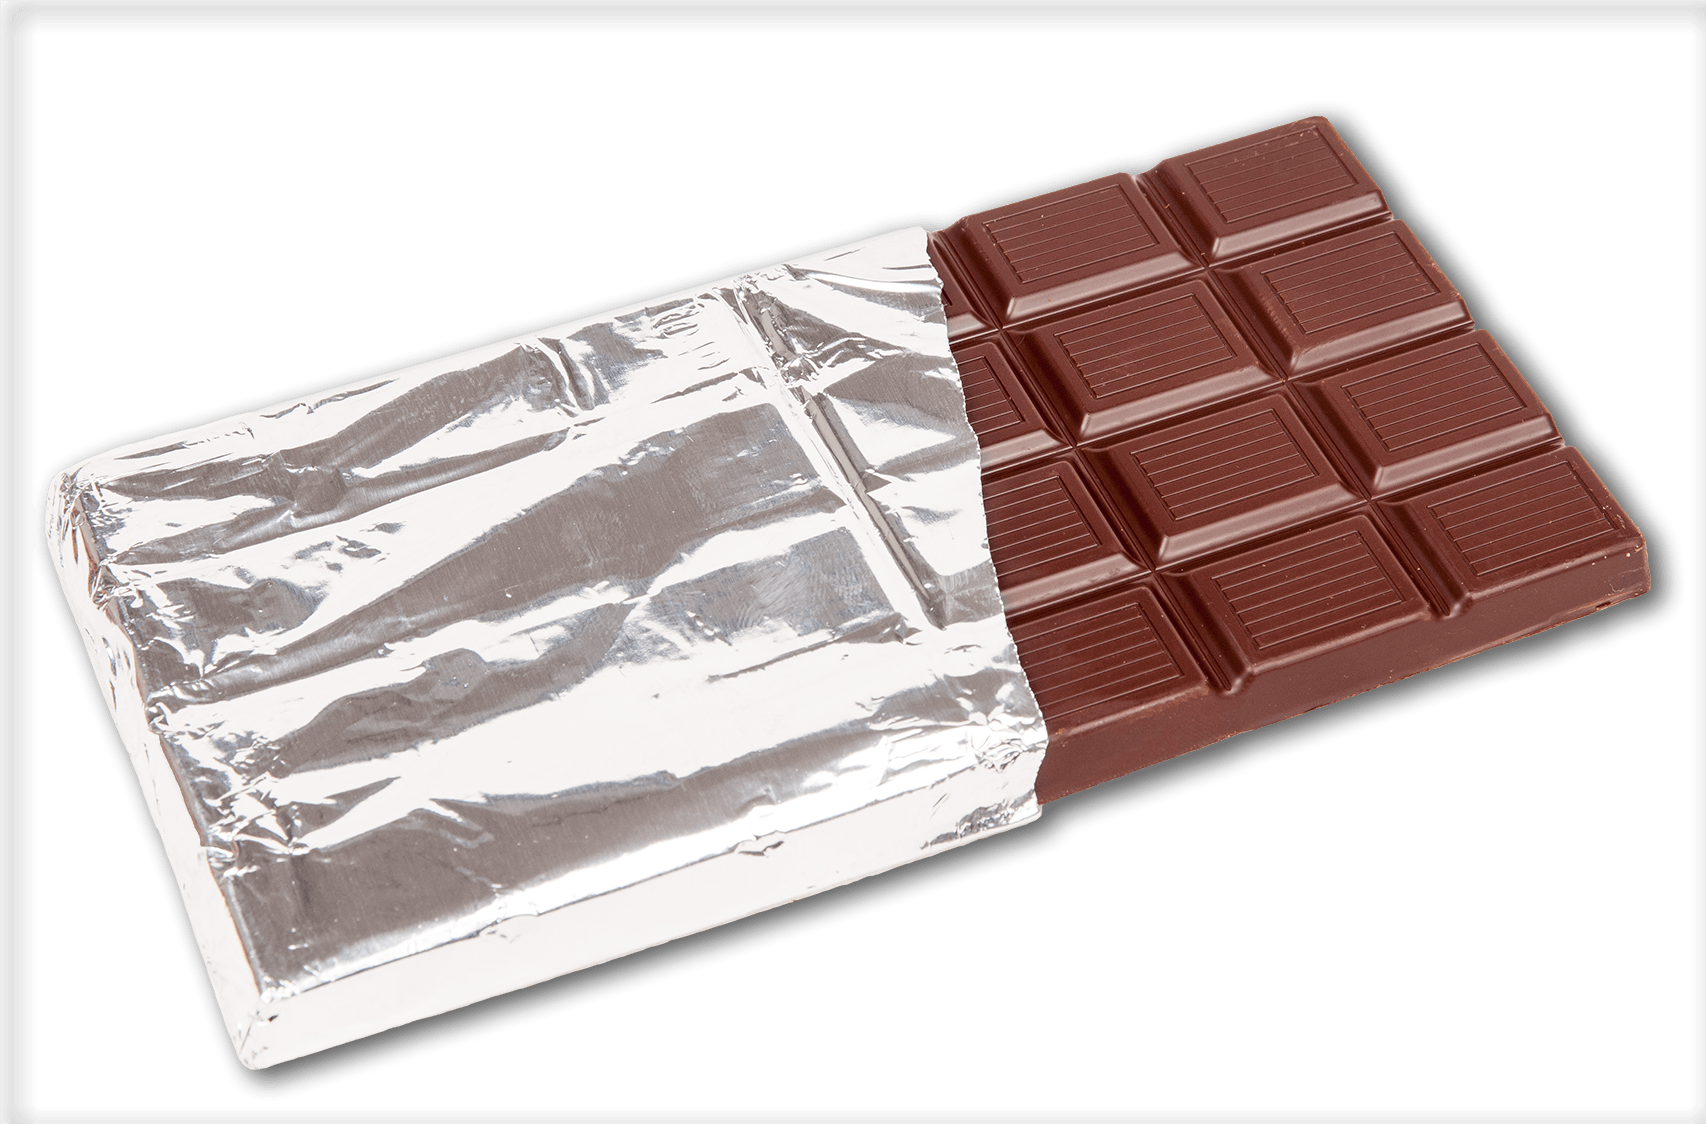 Bar of chocolate. Bar плитка шоколада. Белый шоколад кубиками. Открытая плитка шоколада. Плитка кубики для шоколада.